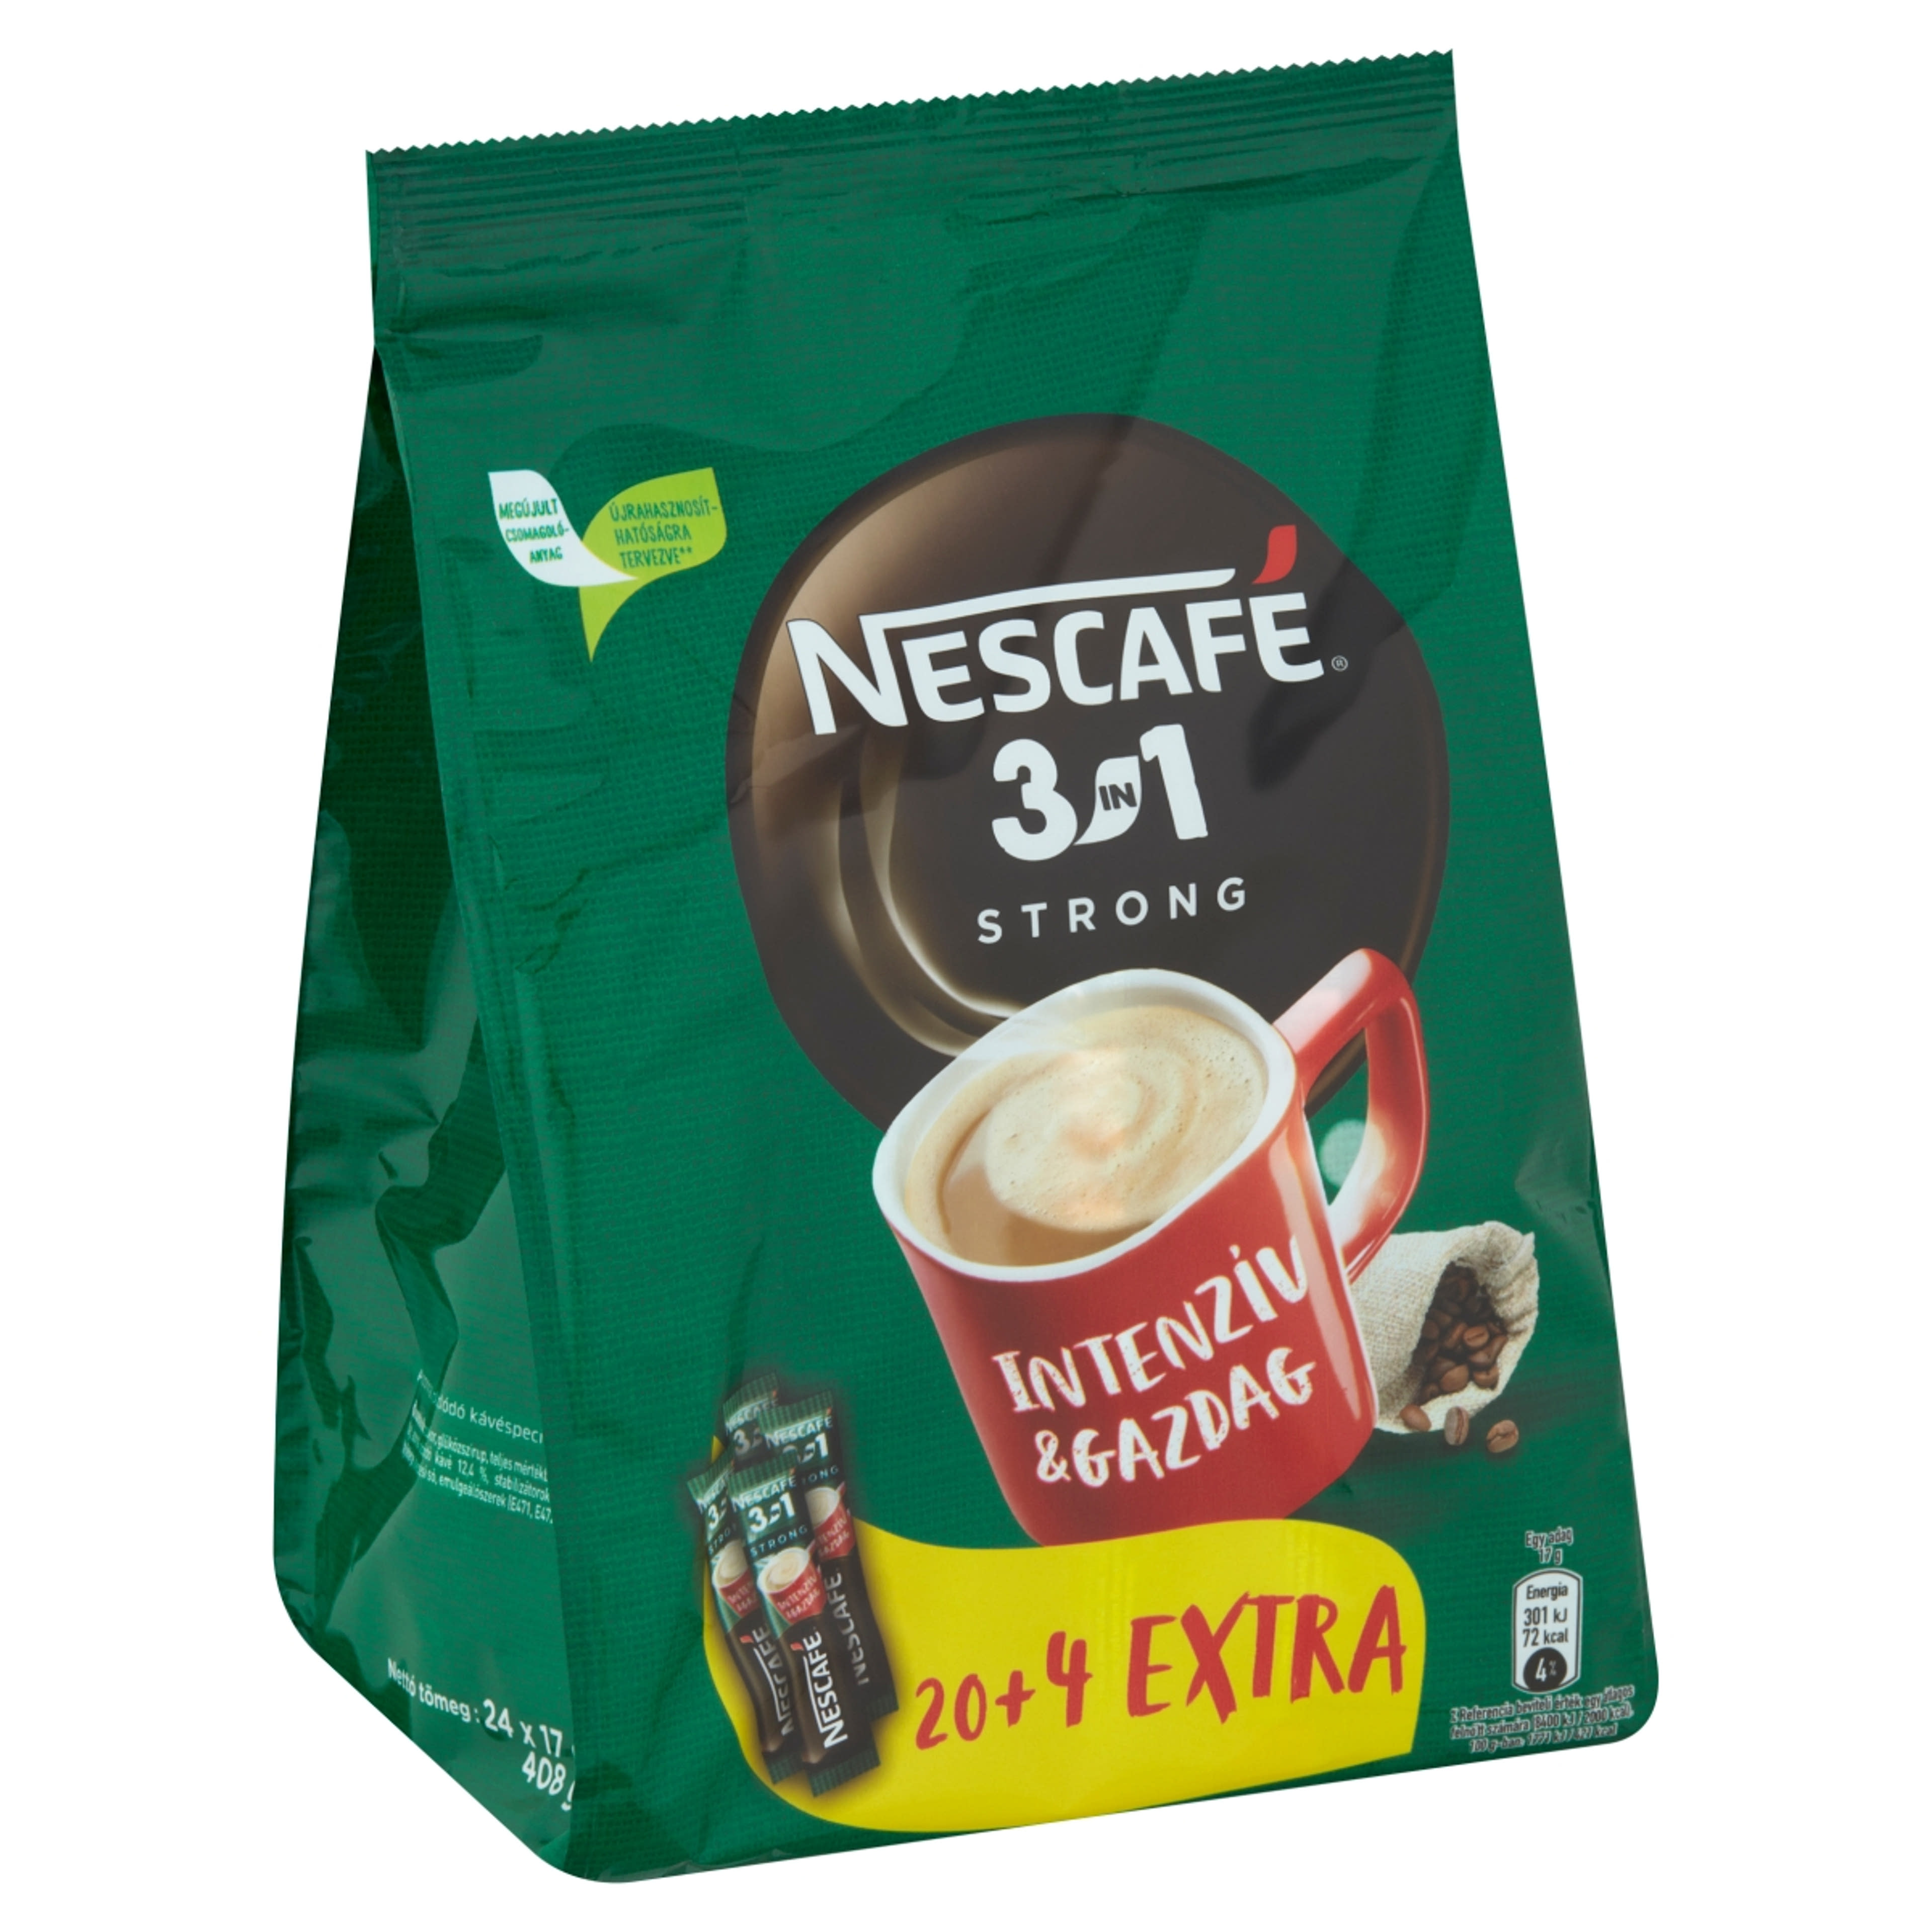 Nescafé 3in1 Strong kávéspecialitás 24 db - 17 g-2